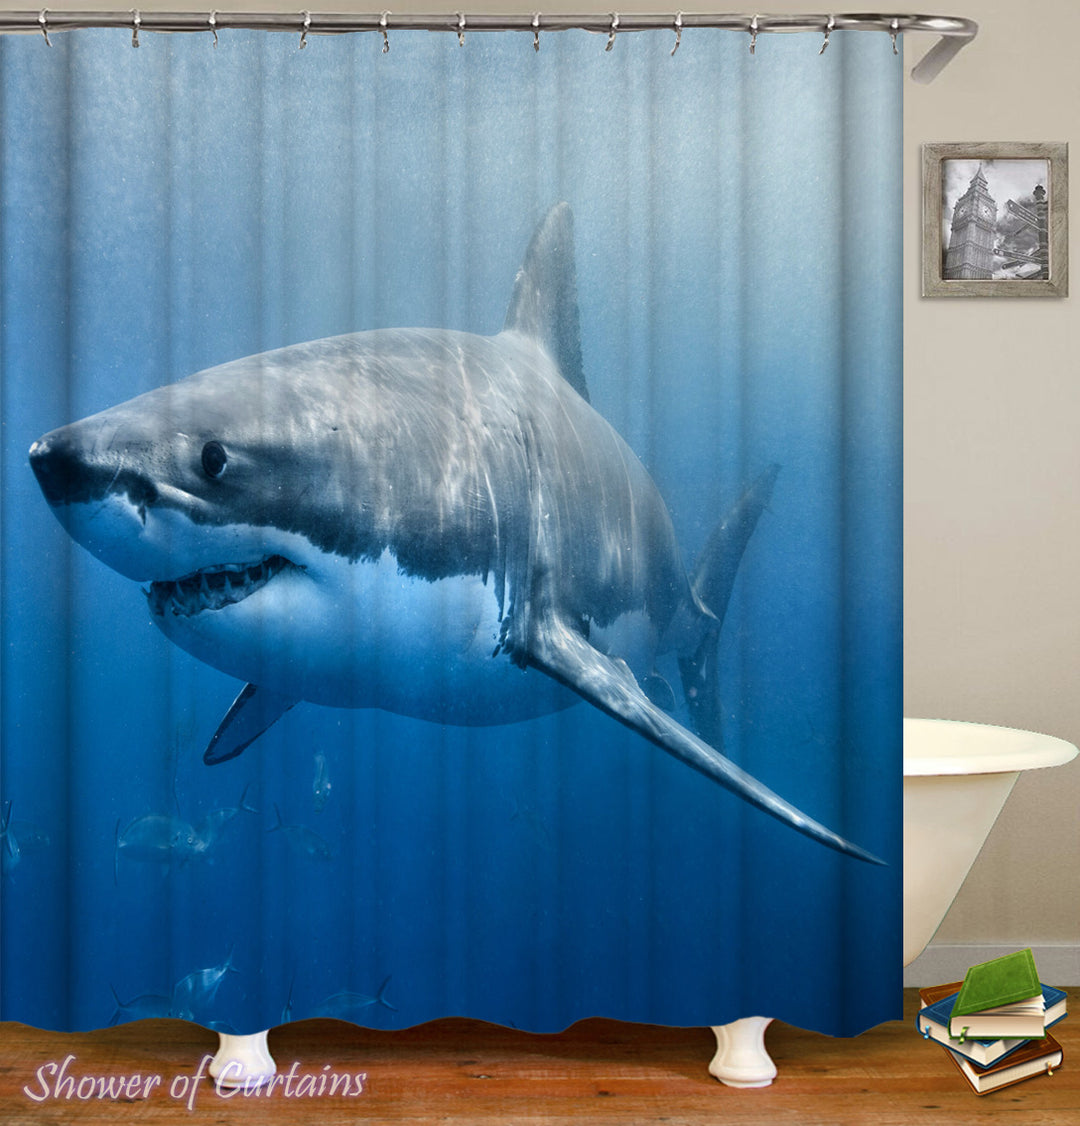 Shark Shower Curtain Collection